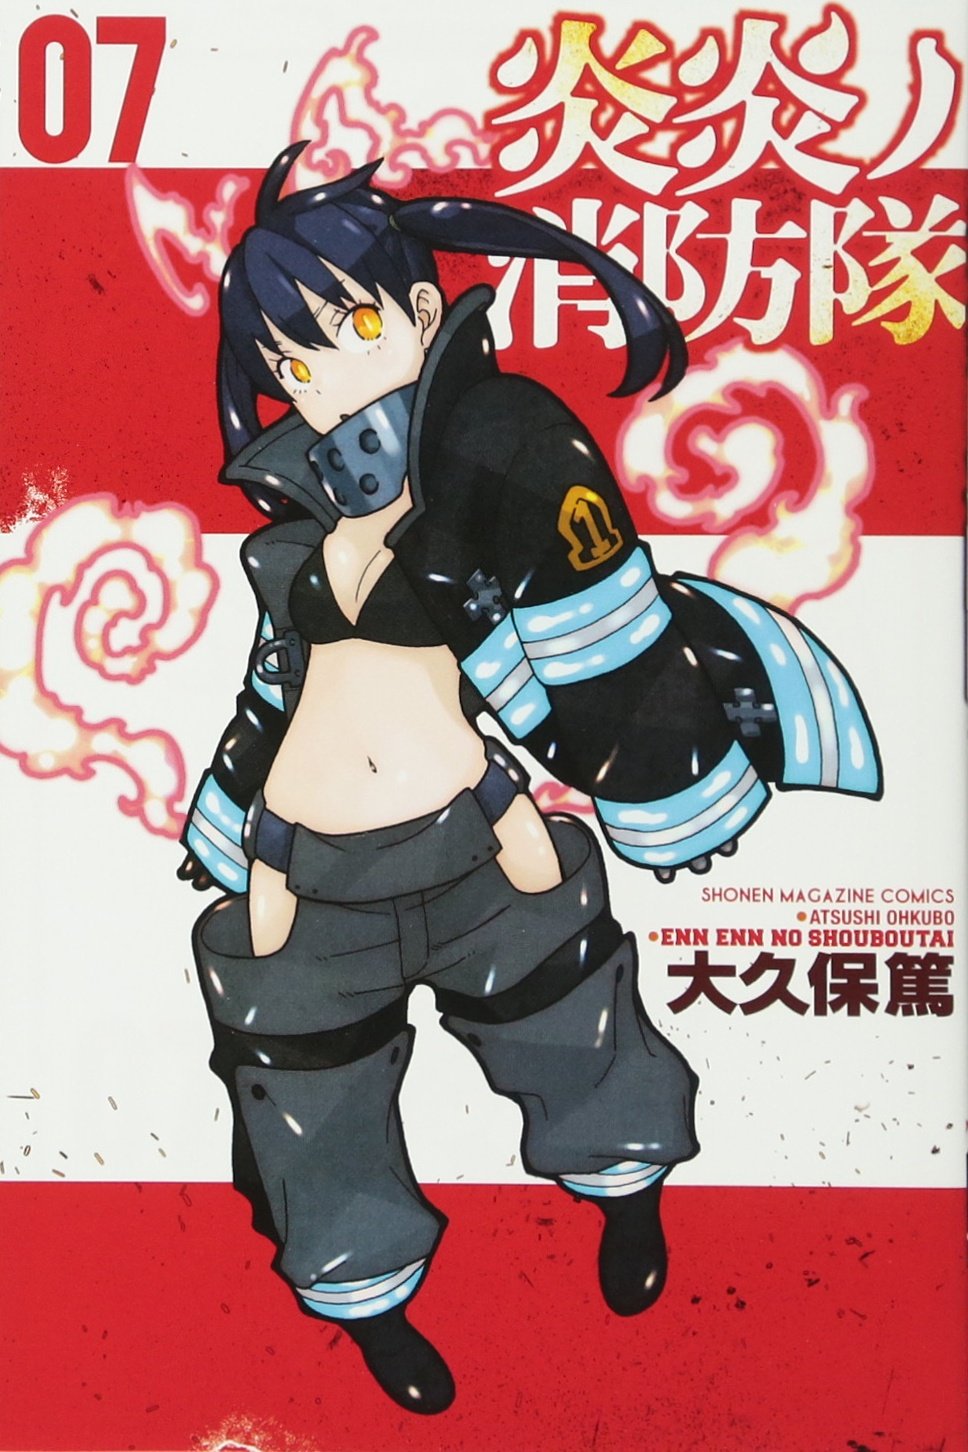 JAPAN Atsushi Ohkubo: Fire Force / Enn Enn no Shouboutai Official